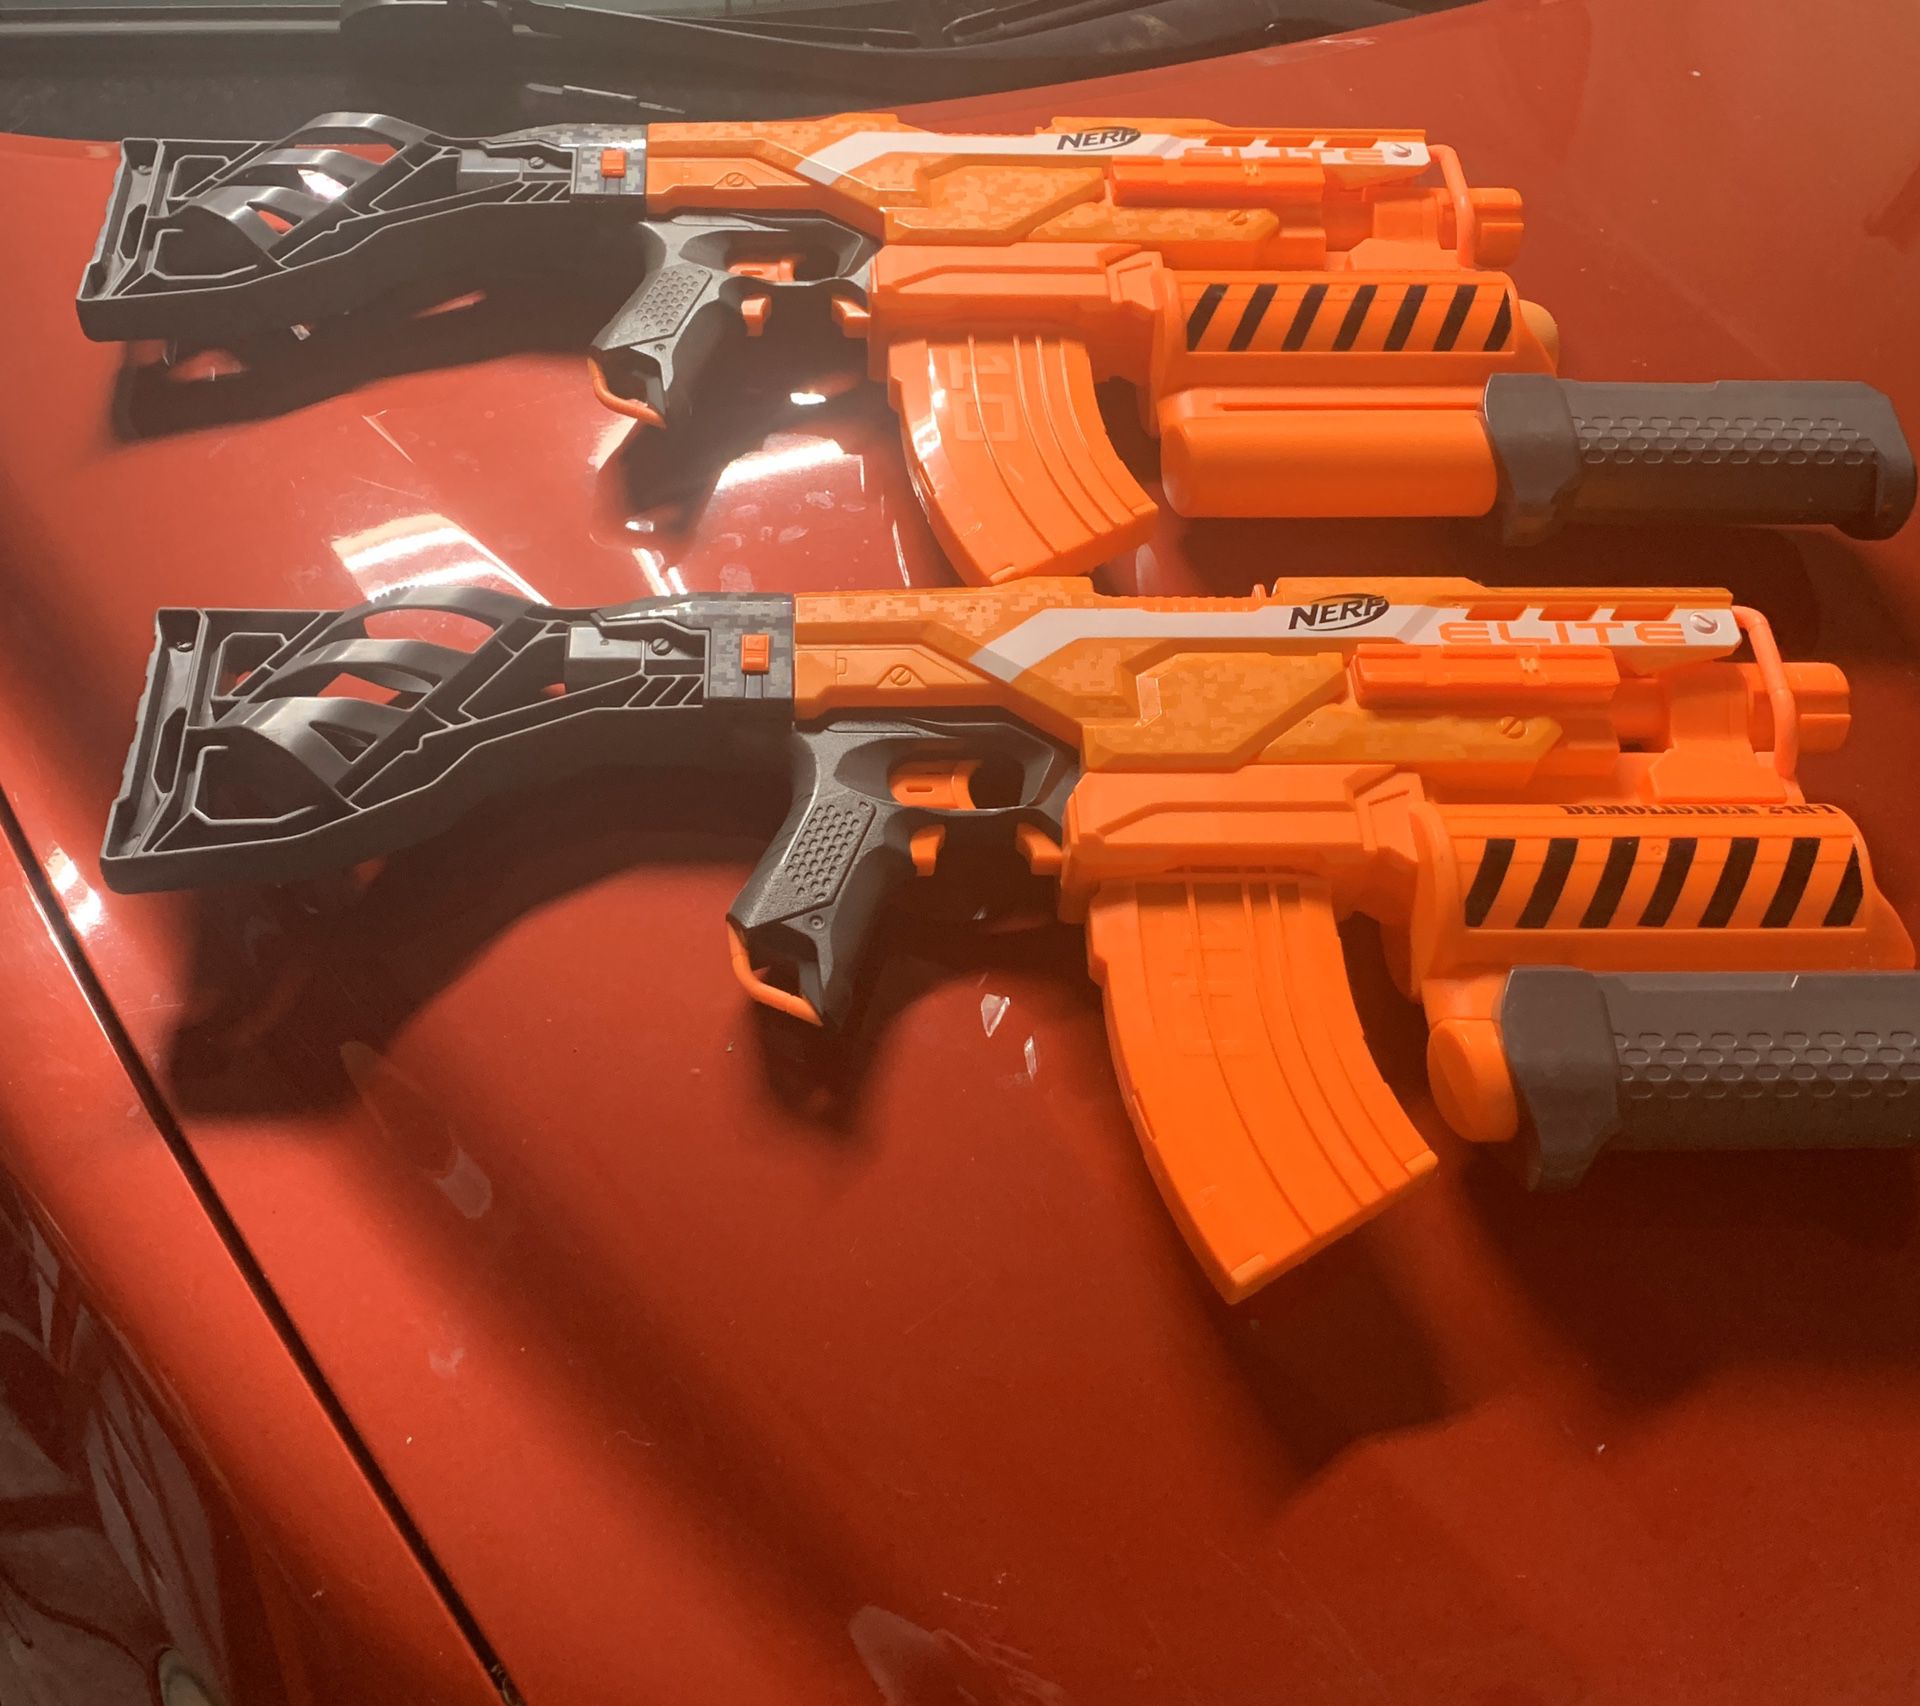 2 Nerf guns